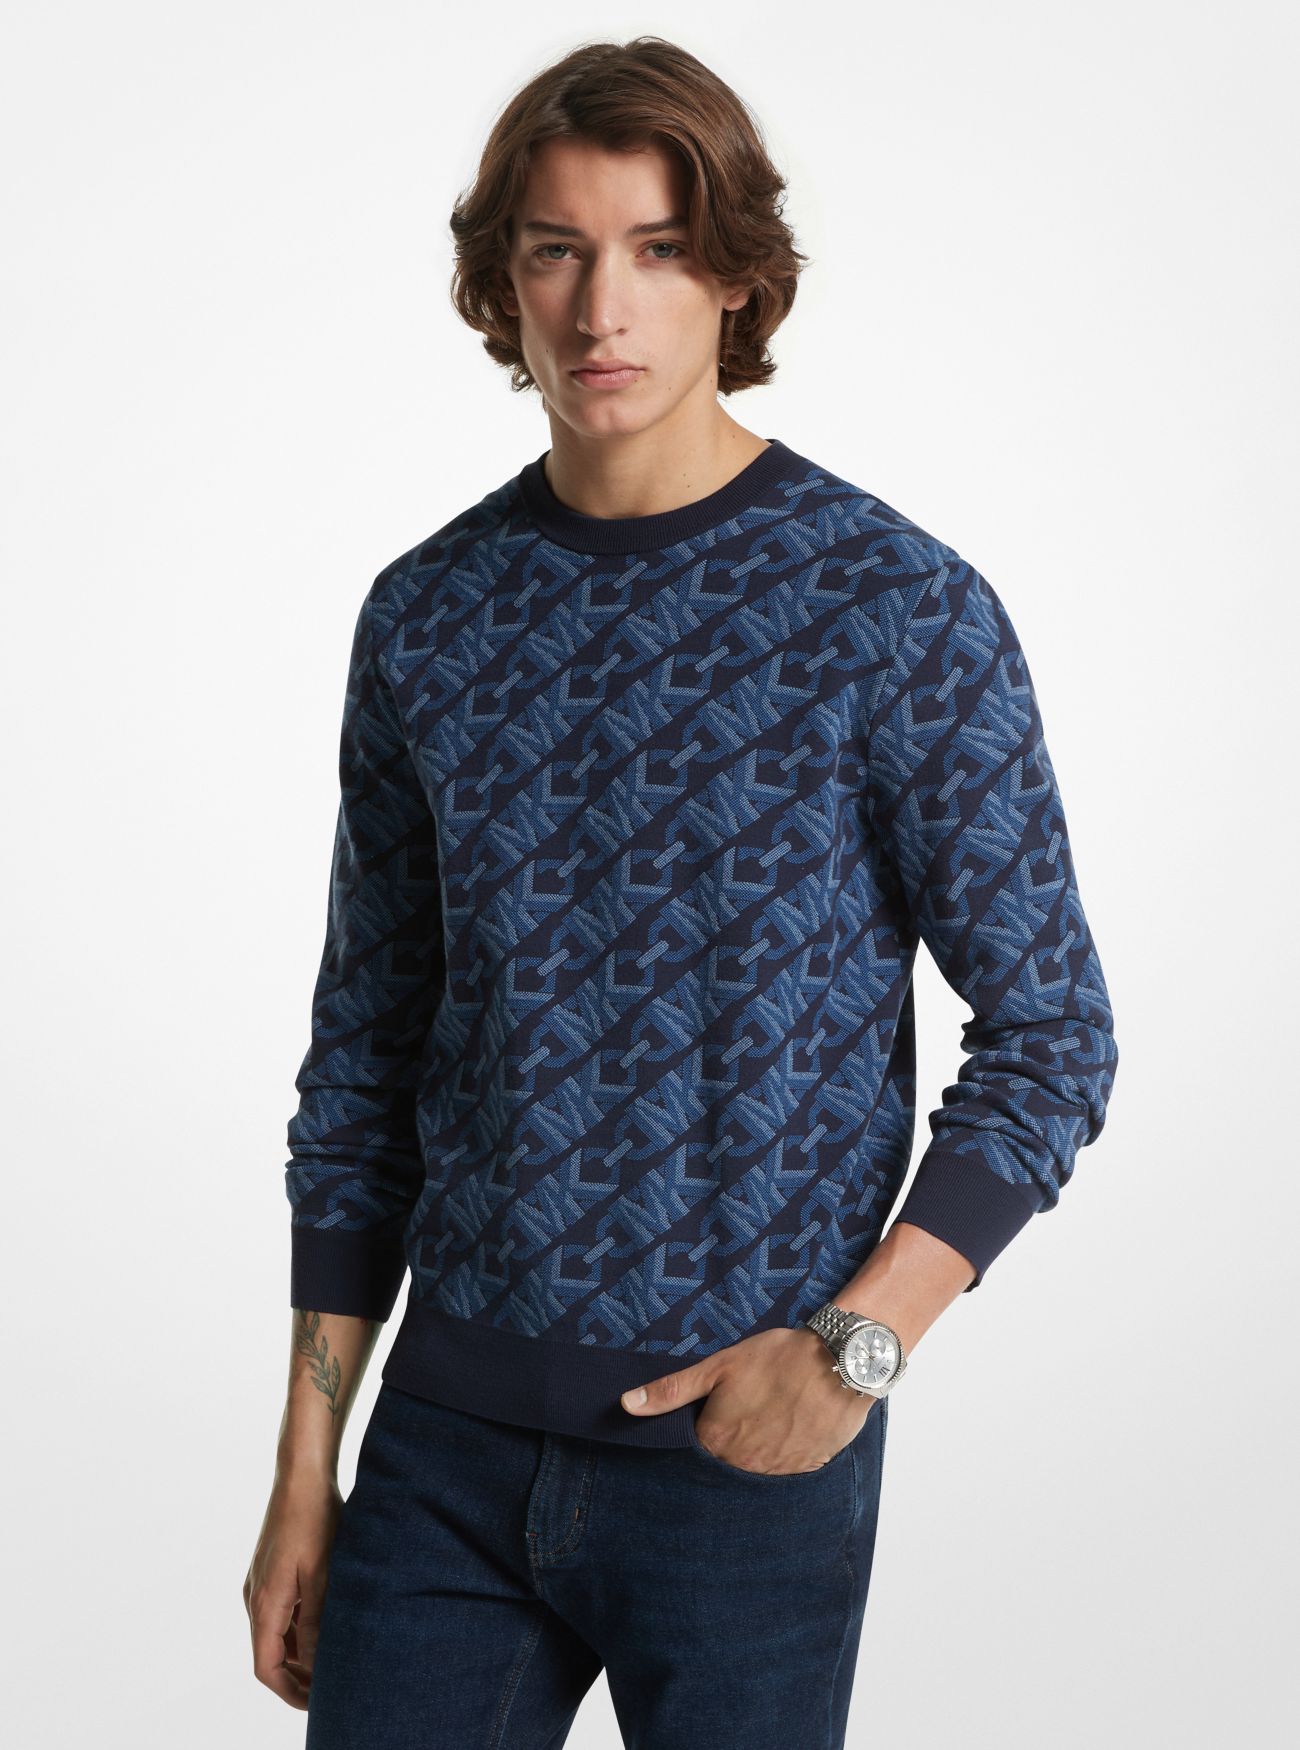 MKJersey de jacquard de lana merino con logotipo imperio - Medianoche(Azul) - Michael Kors